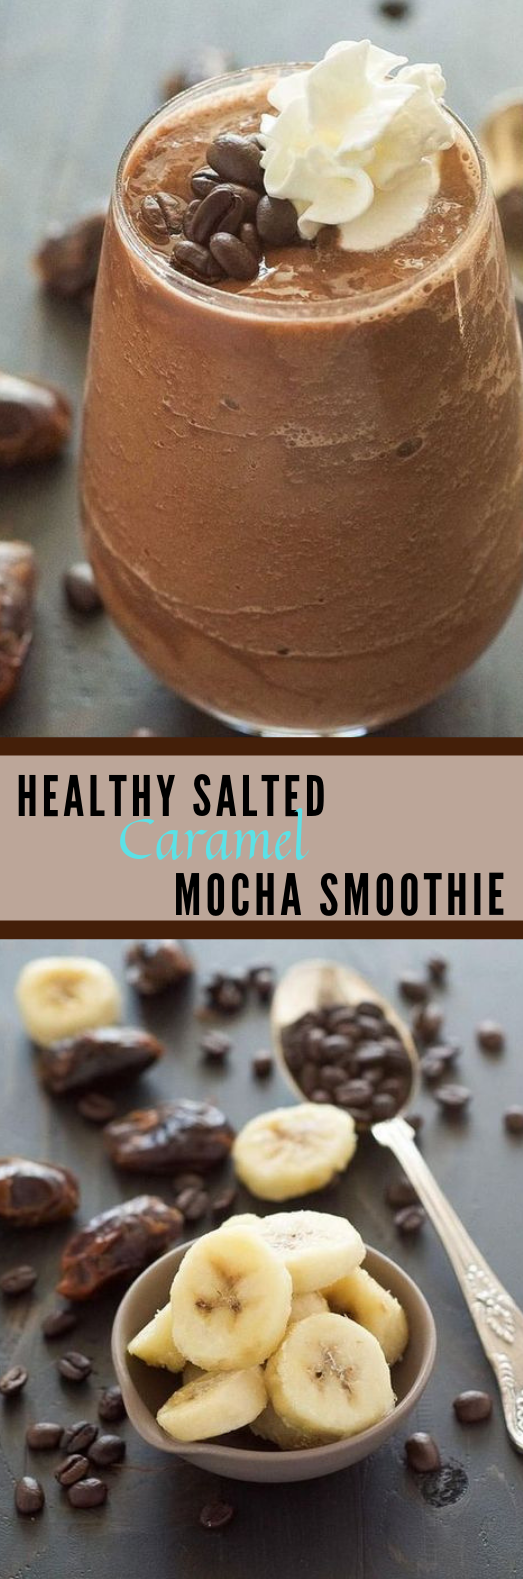 healthy salted caramel mocha smoothie #delicious #caramel